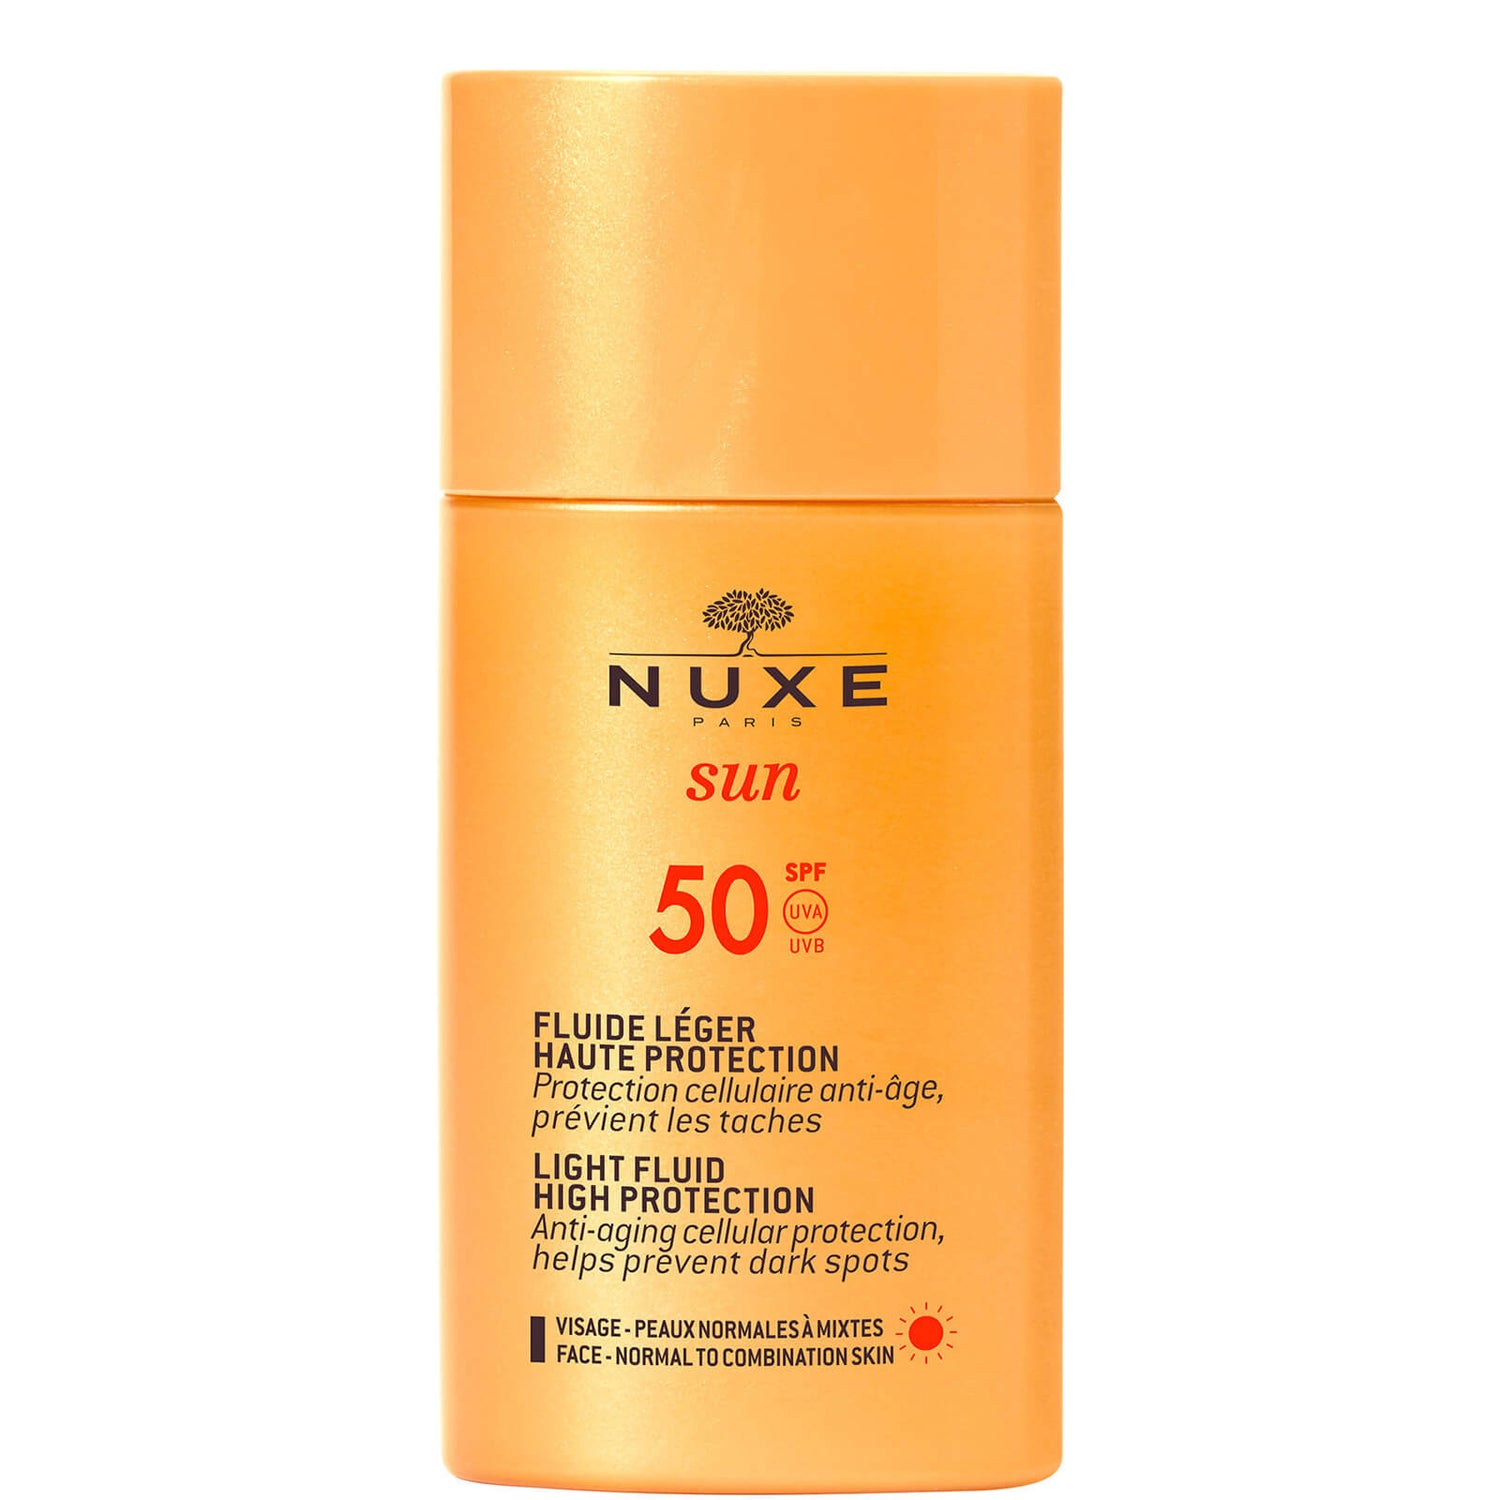 Light Fluid High Protection SPF50, NUXE Sun 50ml